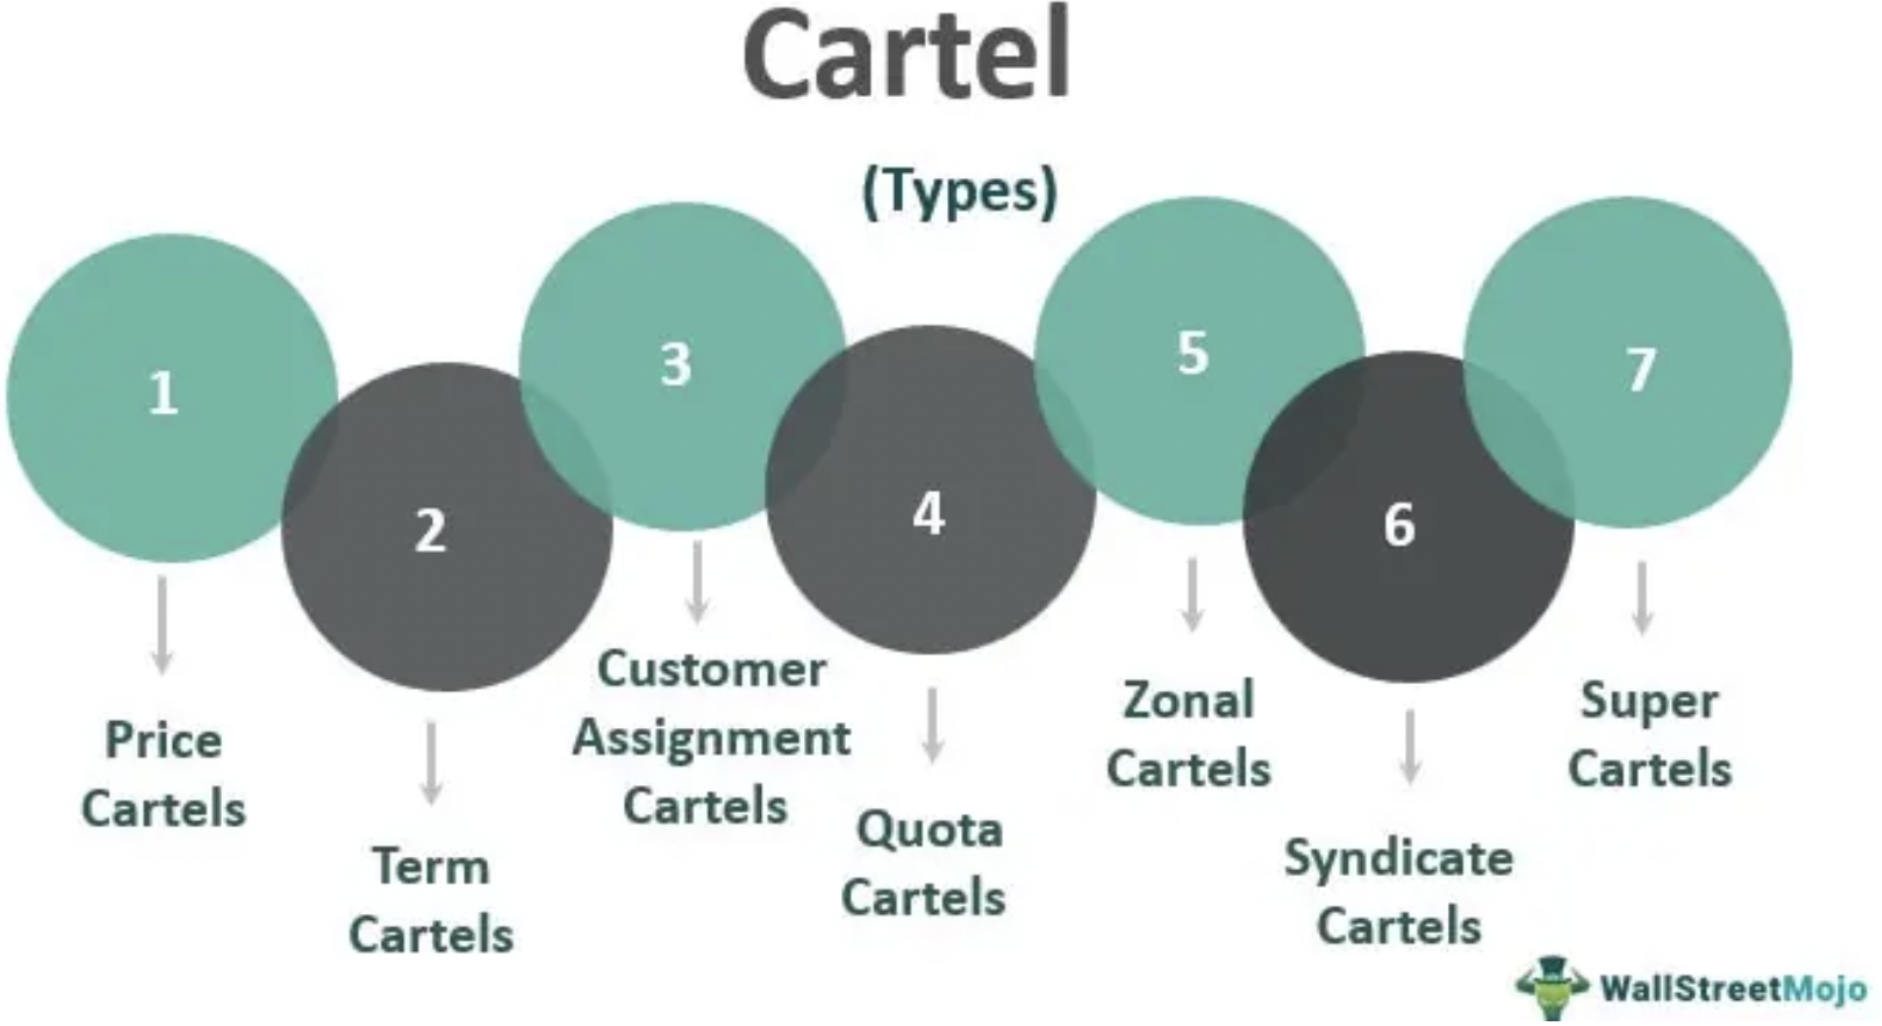 <ol><li><p>price cartels</p></li><li><p>Term cartels: create term agreements to form alliance</p></li><li><p>Customer assignment cartels: each comapny is assigned specific customer demographic</p></li><li><p>Quota cartels: e.g. OPEC, regulate how much each producer can produce</p></li><li><p>Zonal cartels: dividing country into zones so each company only in specific zone</p></li><li><p>Syndicate cartels: Drug cartels: crimes</p></li><li><p>Super cartels: Large cartels</p></li></ol>